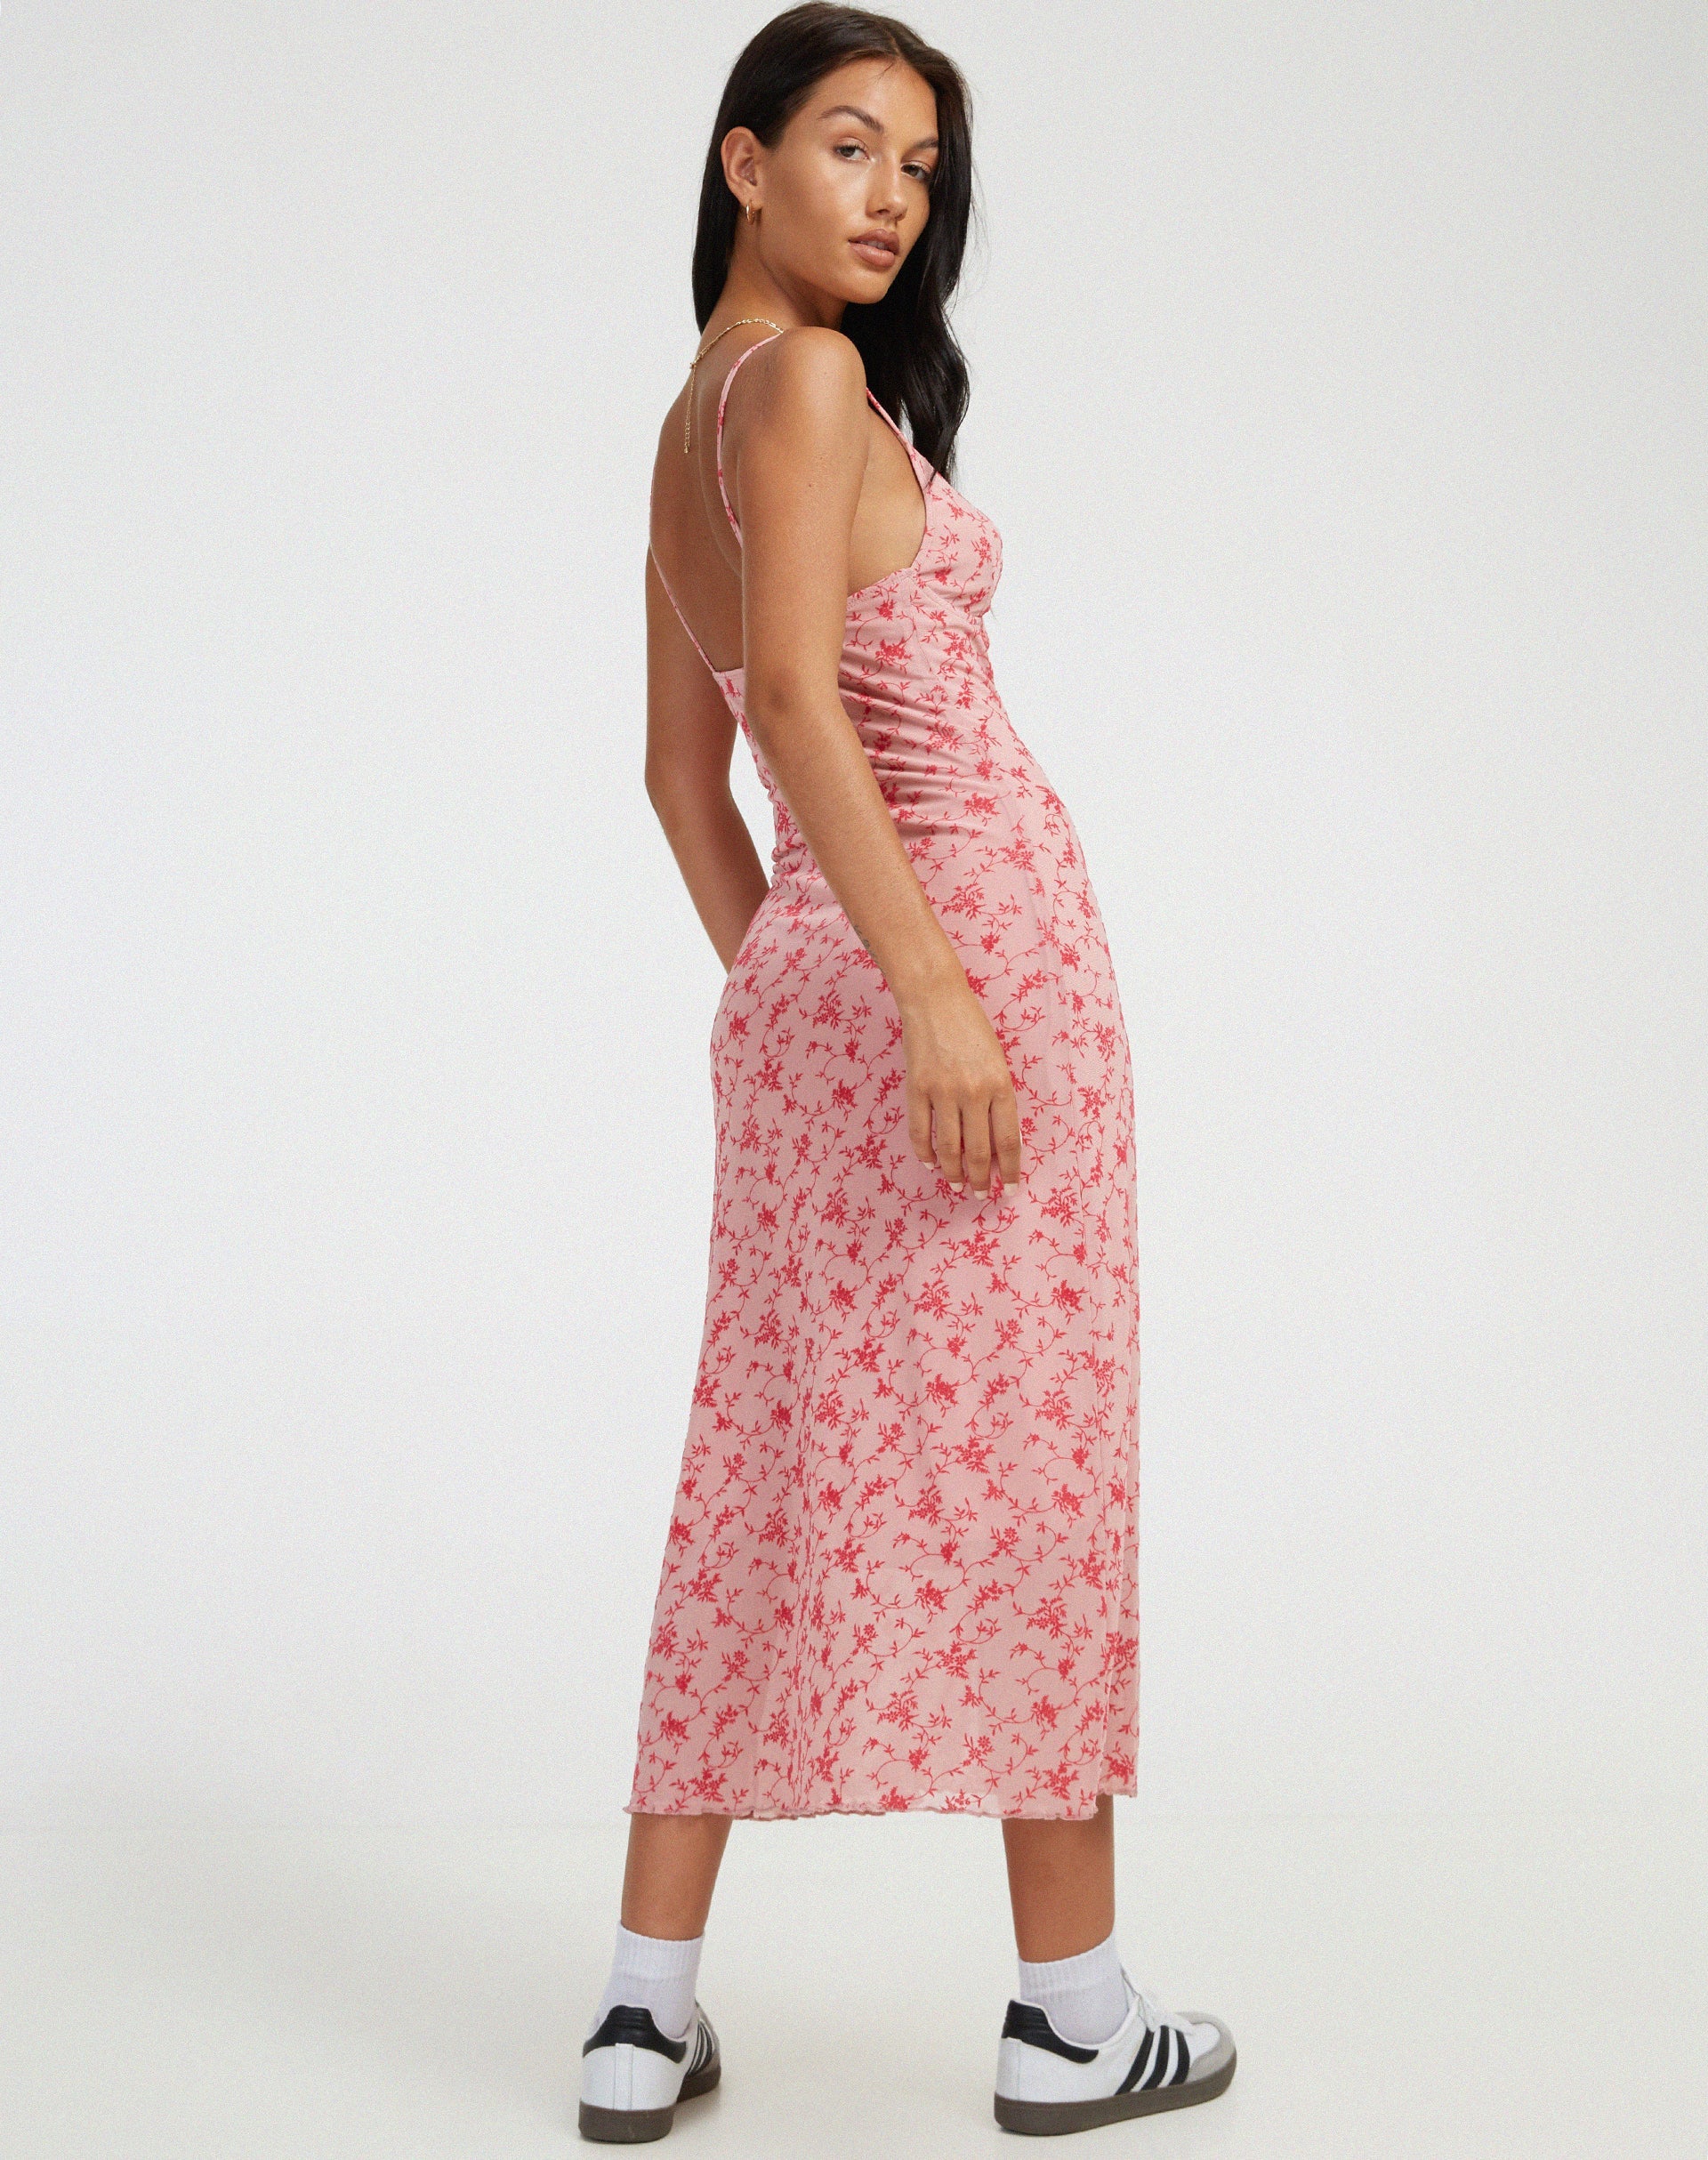 image of Coya Maxi Dress in Love Bloom Pink Flock